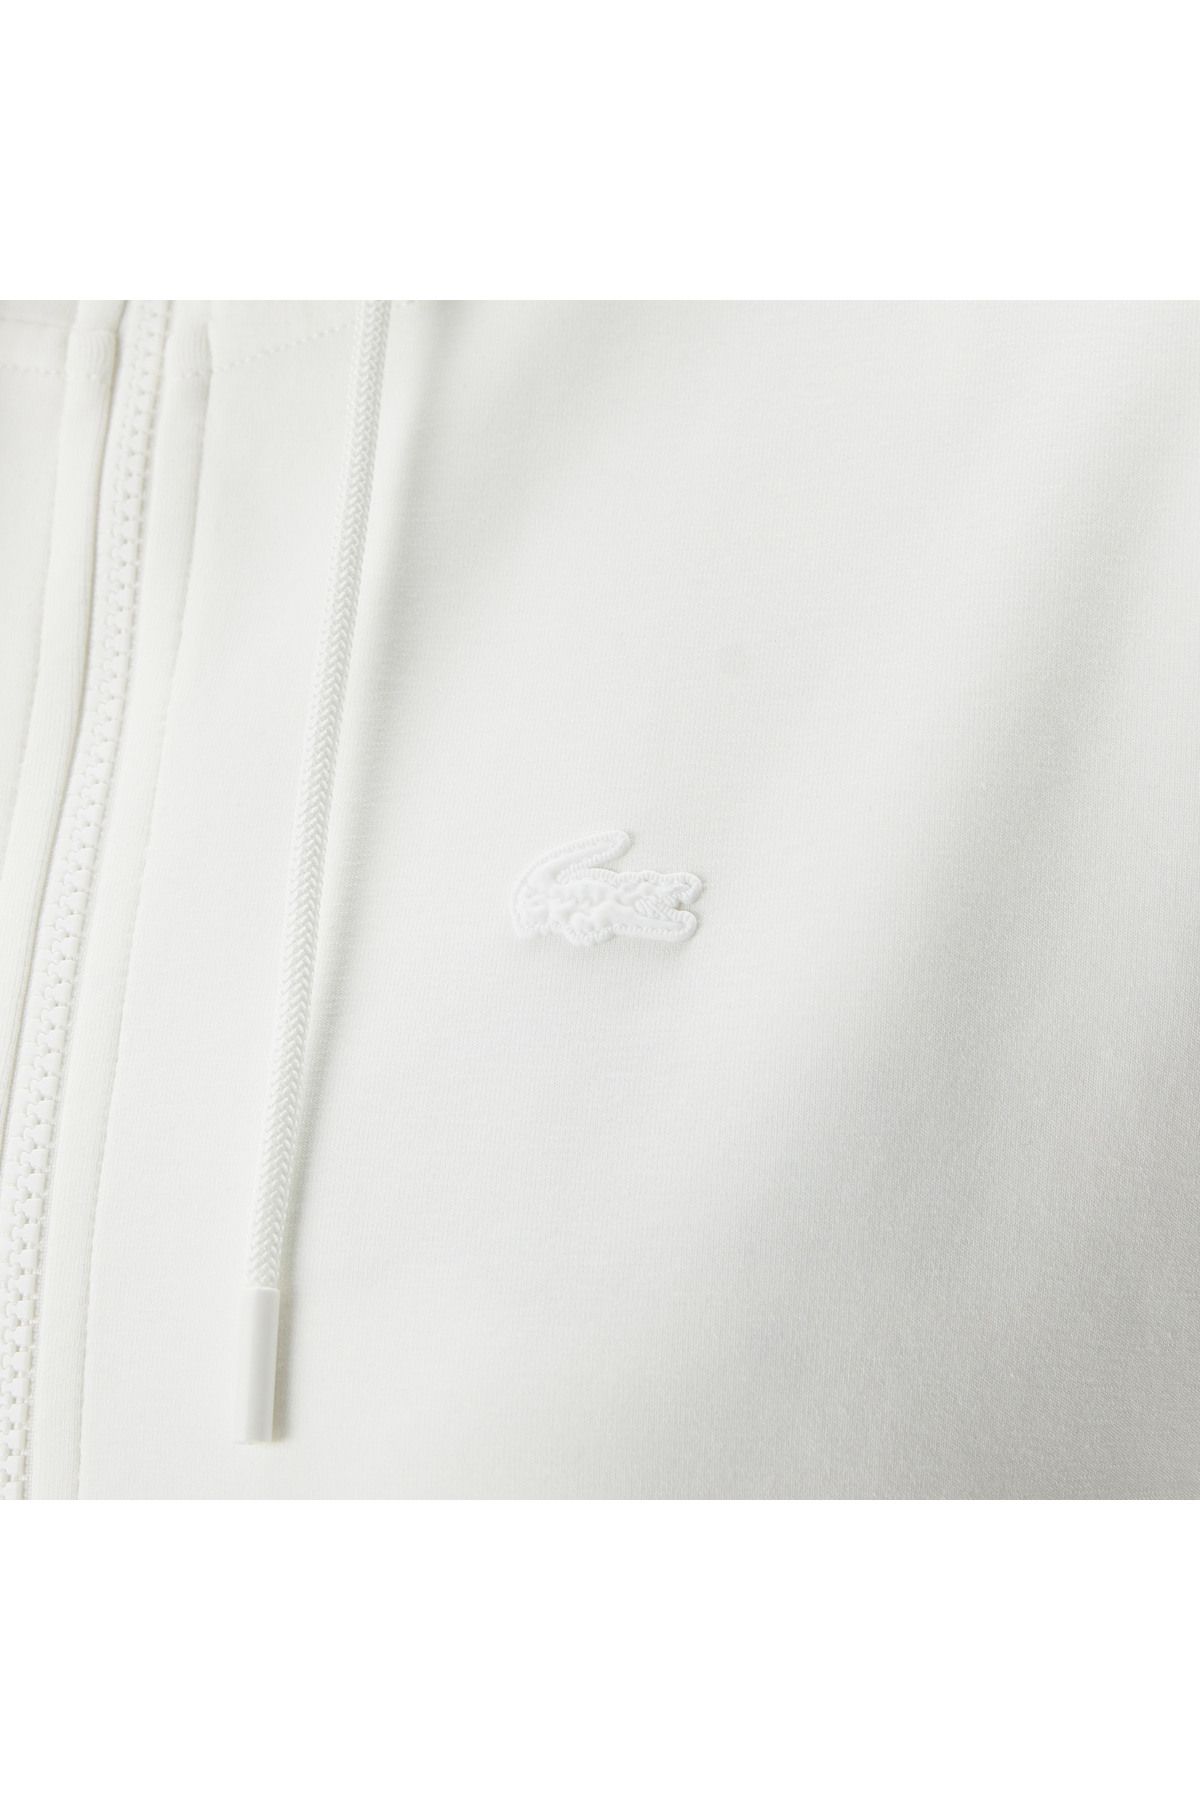 Lacoste پیراهن سفید با روکش معمولی زنانه